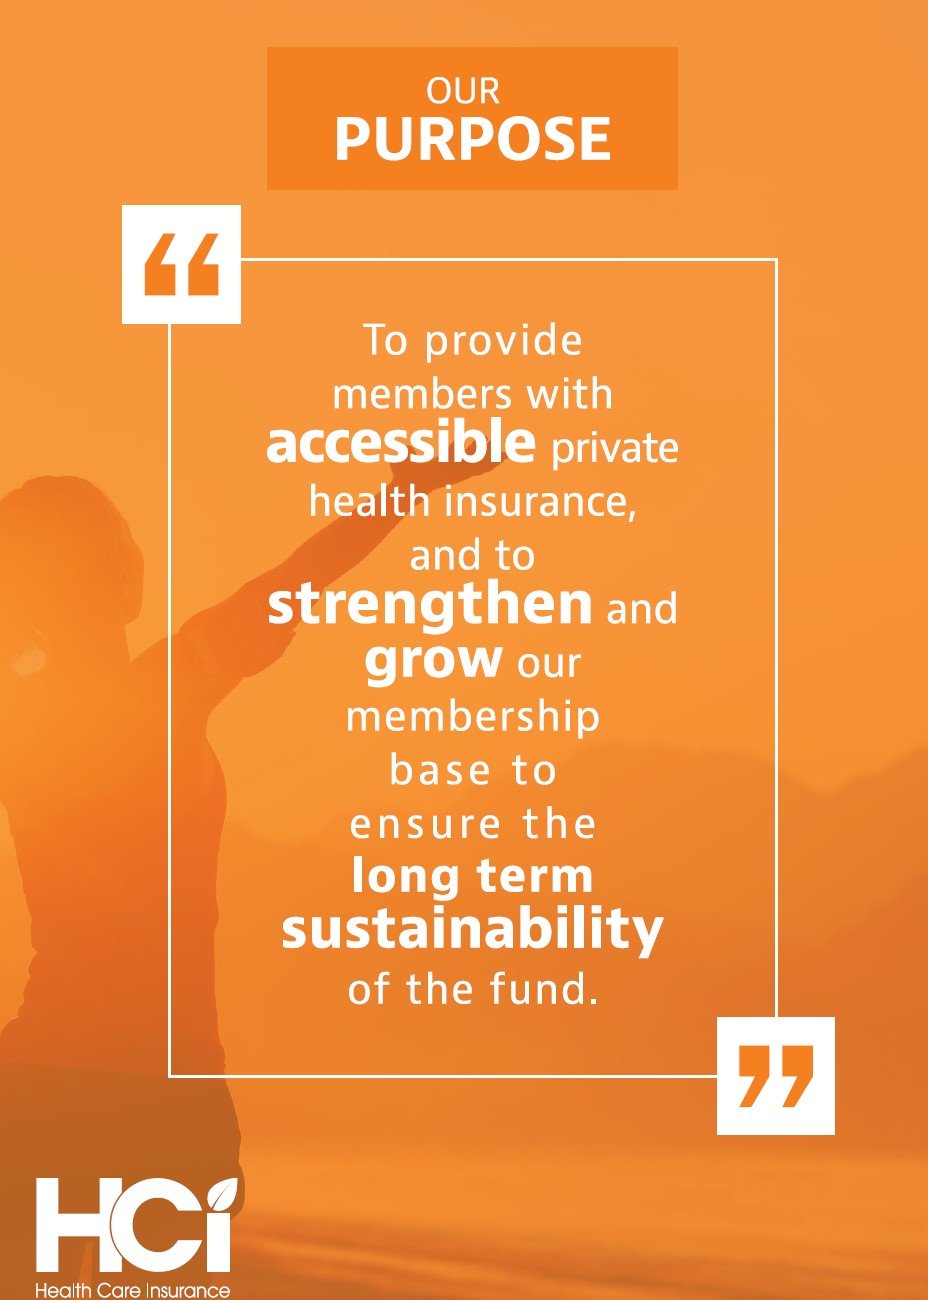 HCi's purpose is ot provide accessible health insurance